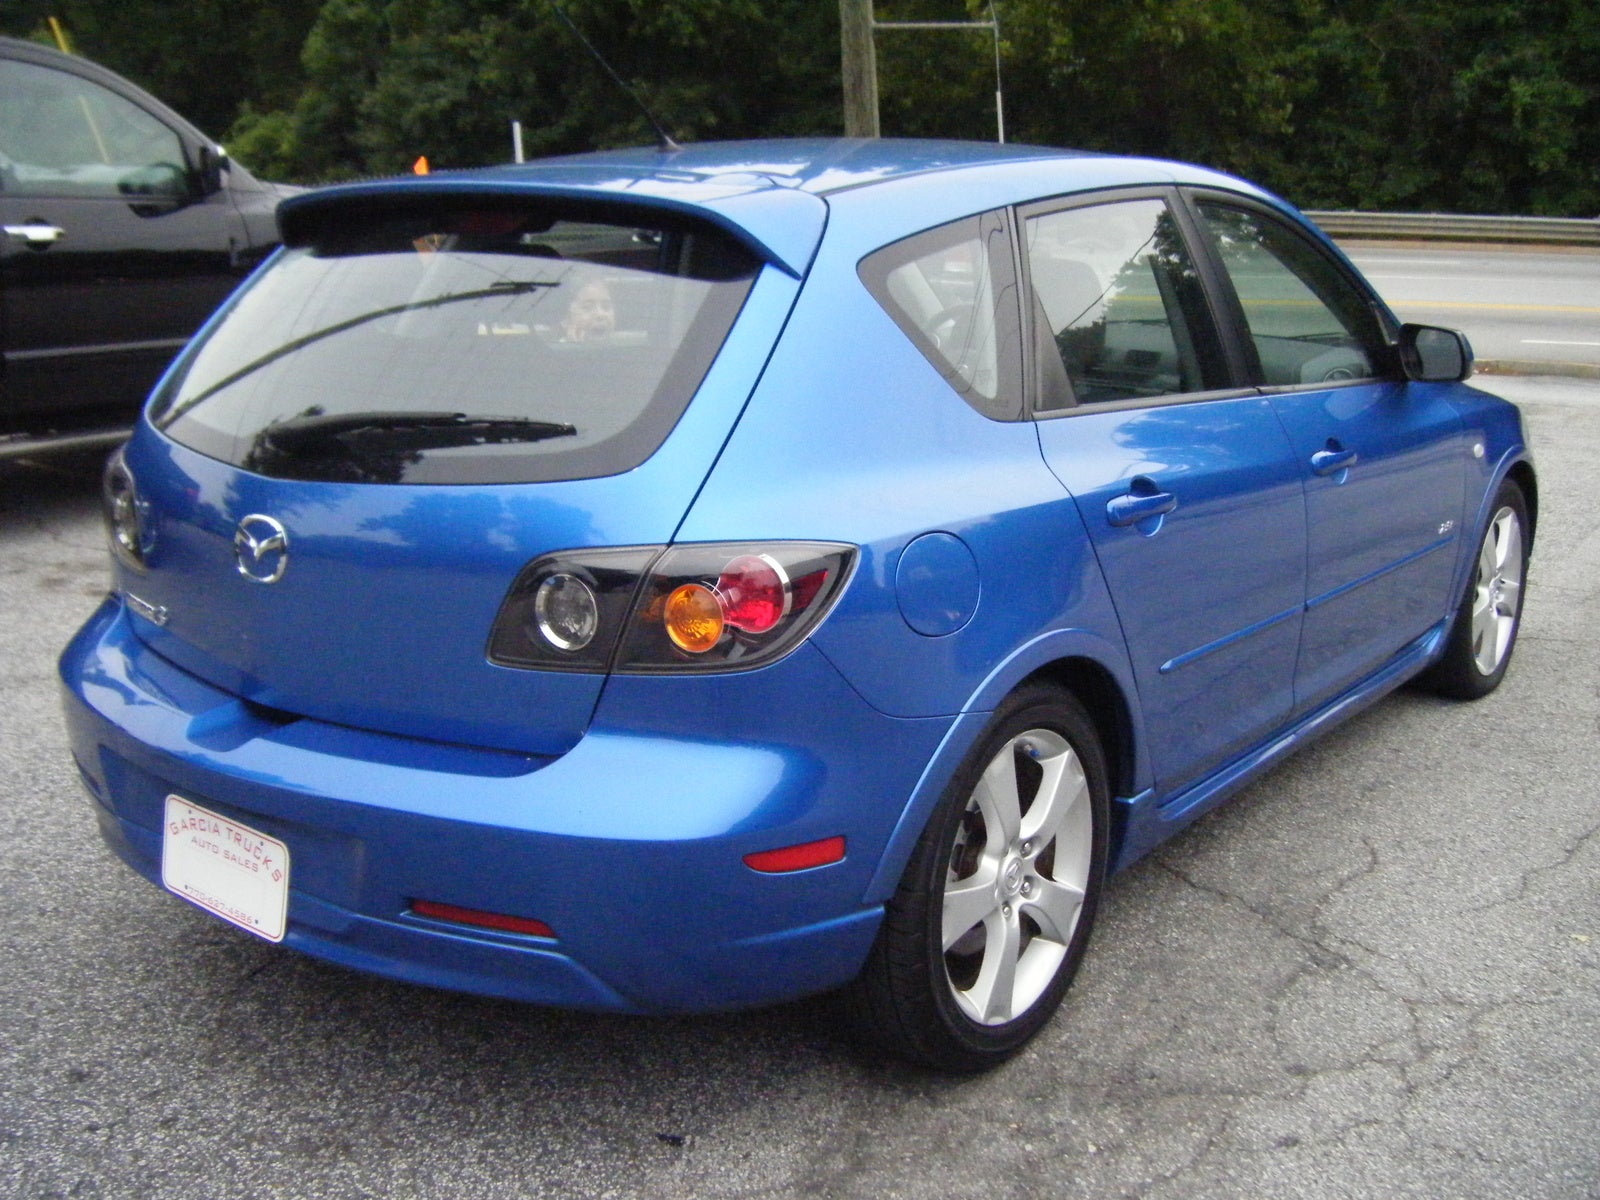 Picture of 2005 Mazda MAZDA3 S Hatchback, exterior